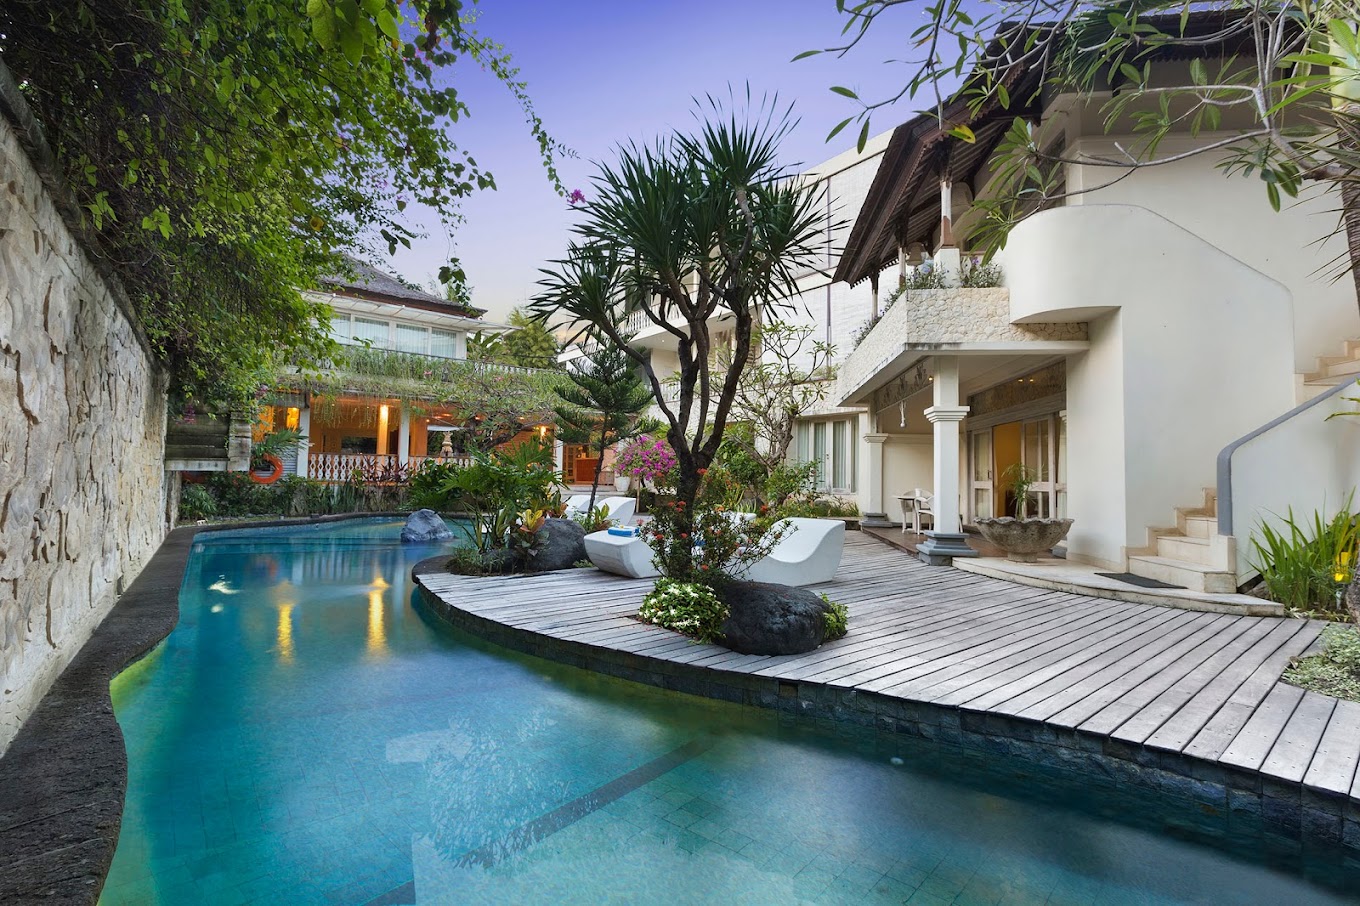 Hotel Kresna di tepi laut Bali